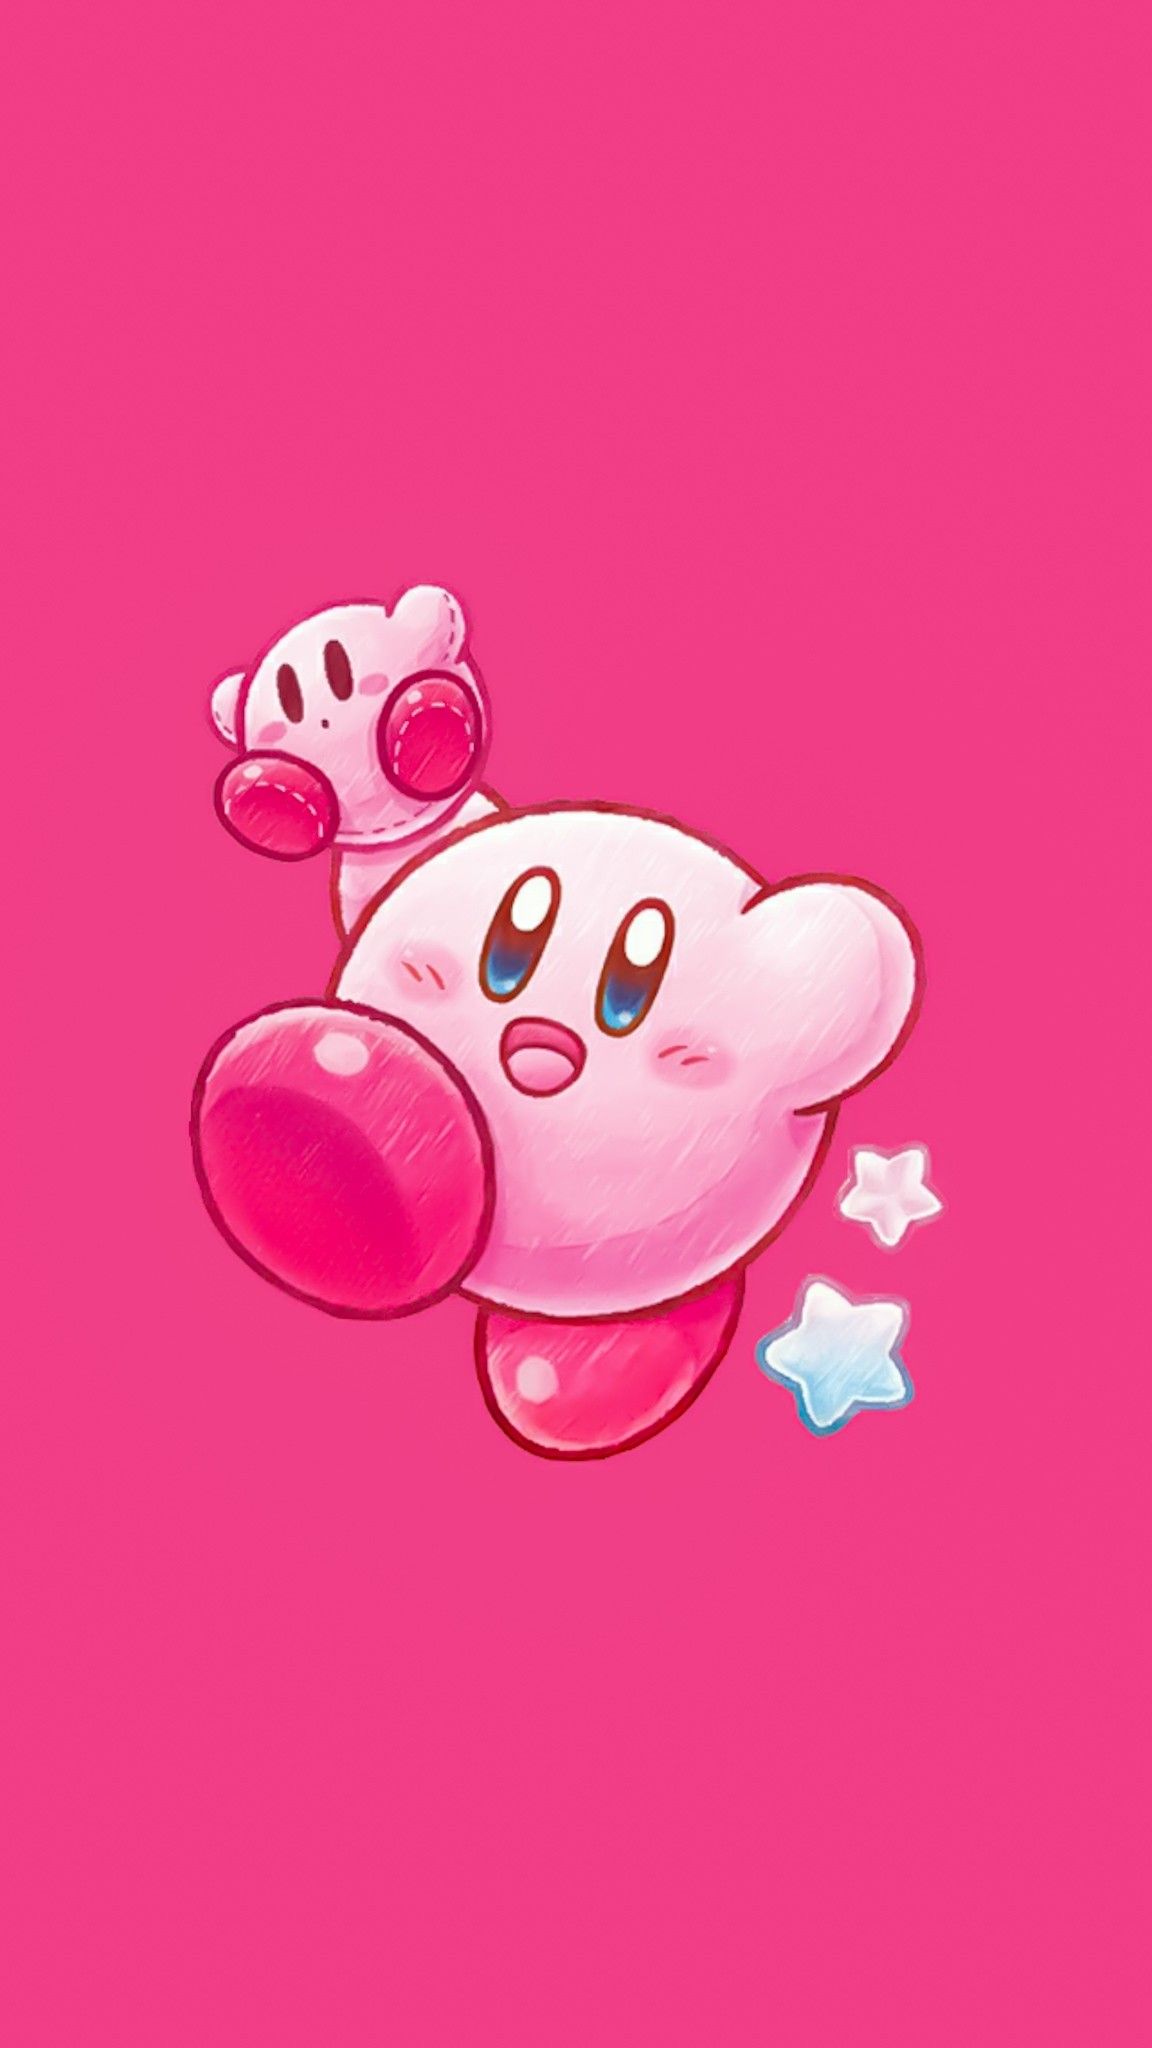 Kirby BG. Kirby art nintendo, Kirby art, Kirby character